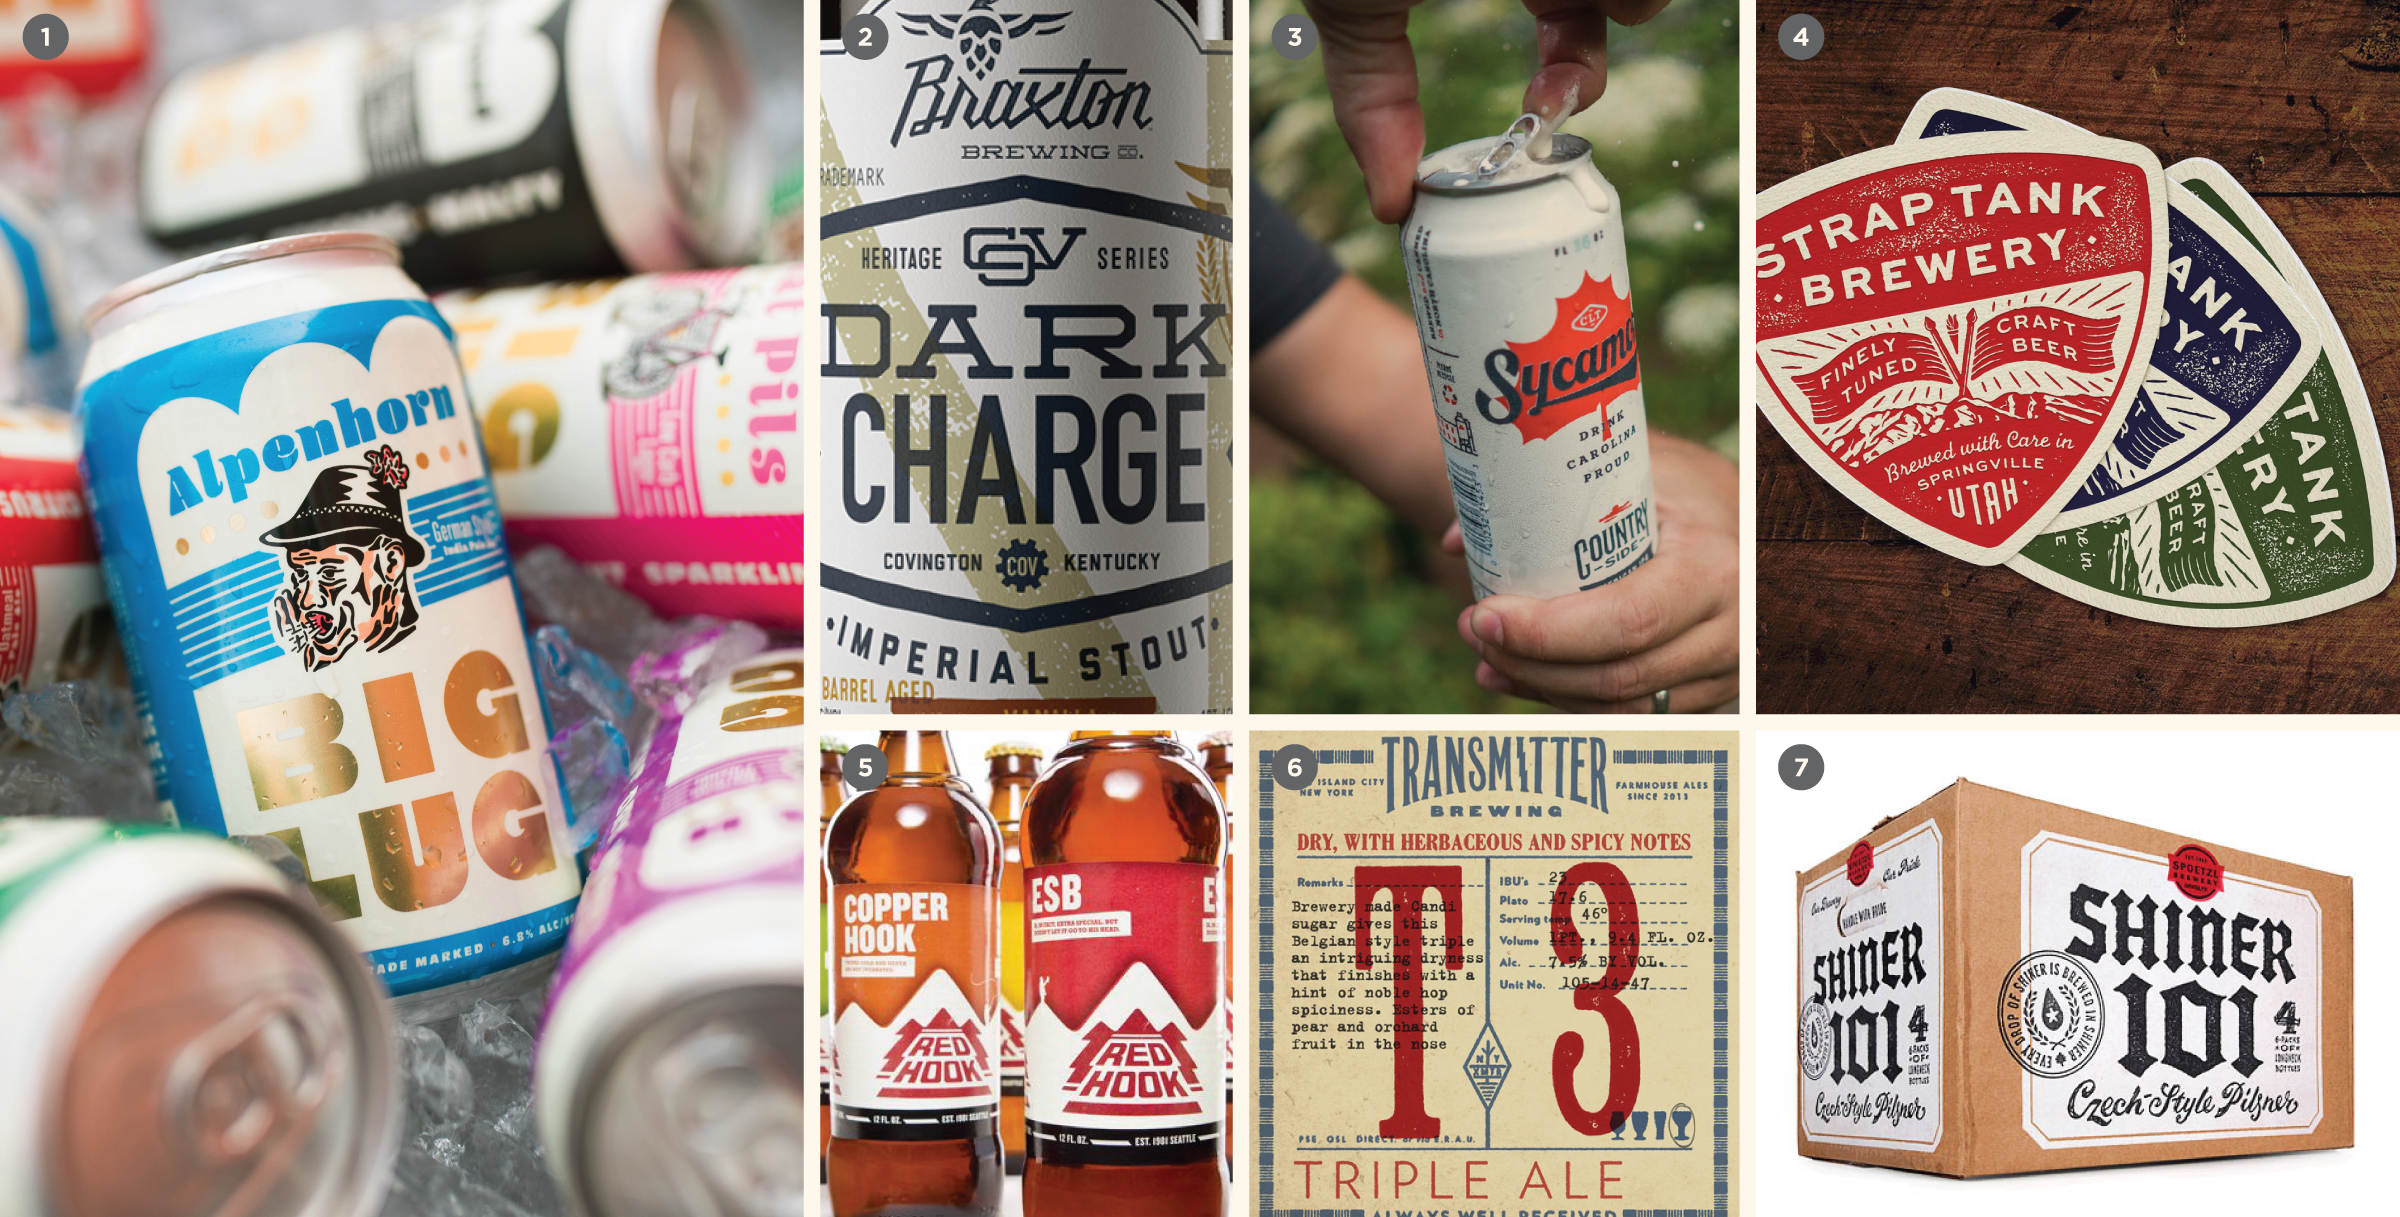 2020 craft beer branding trends part 1: The decade's most